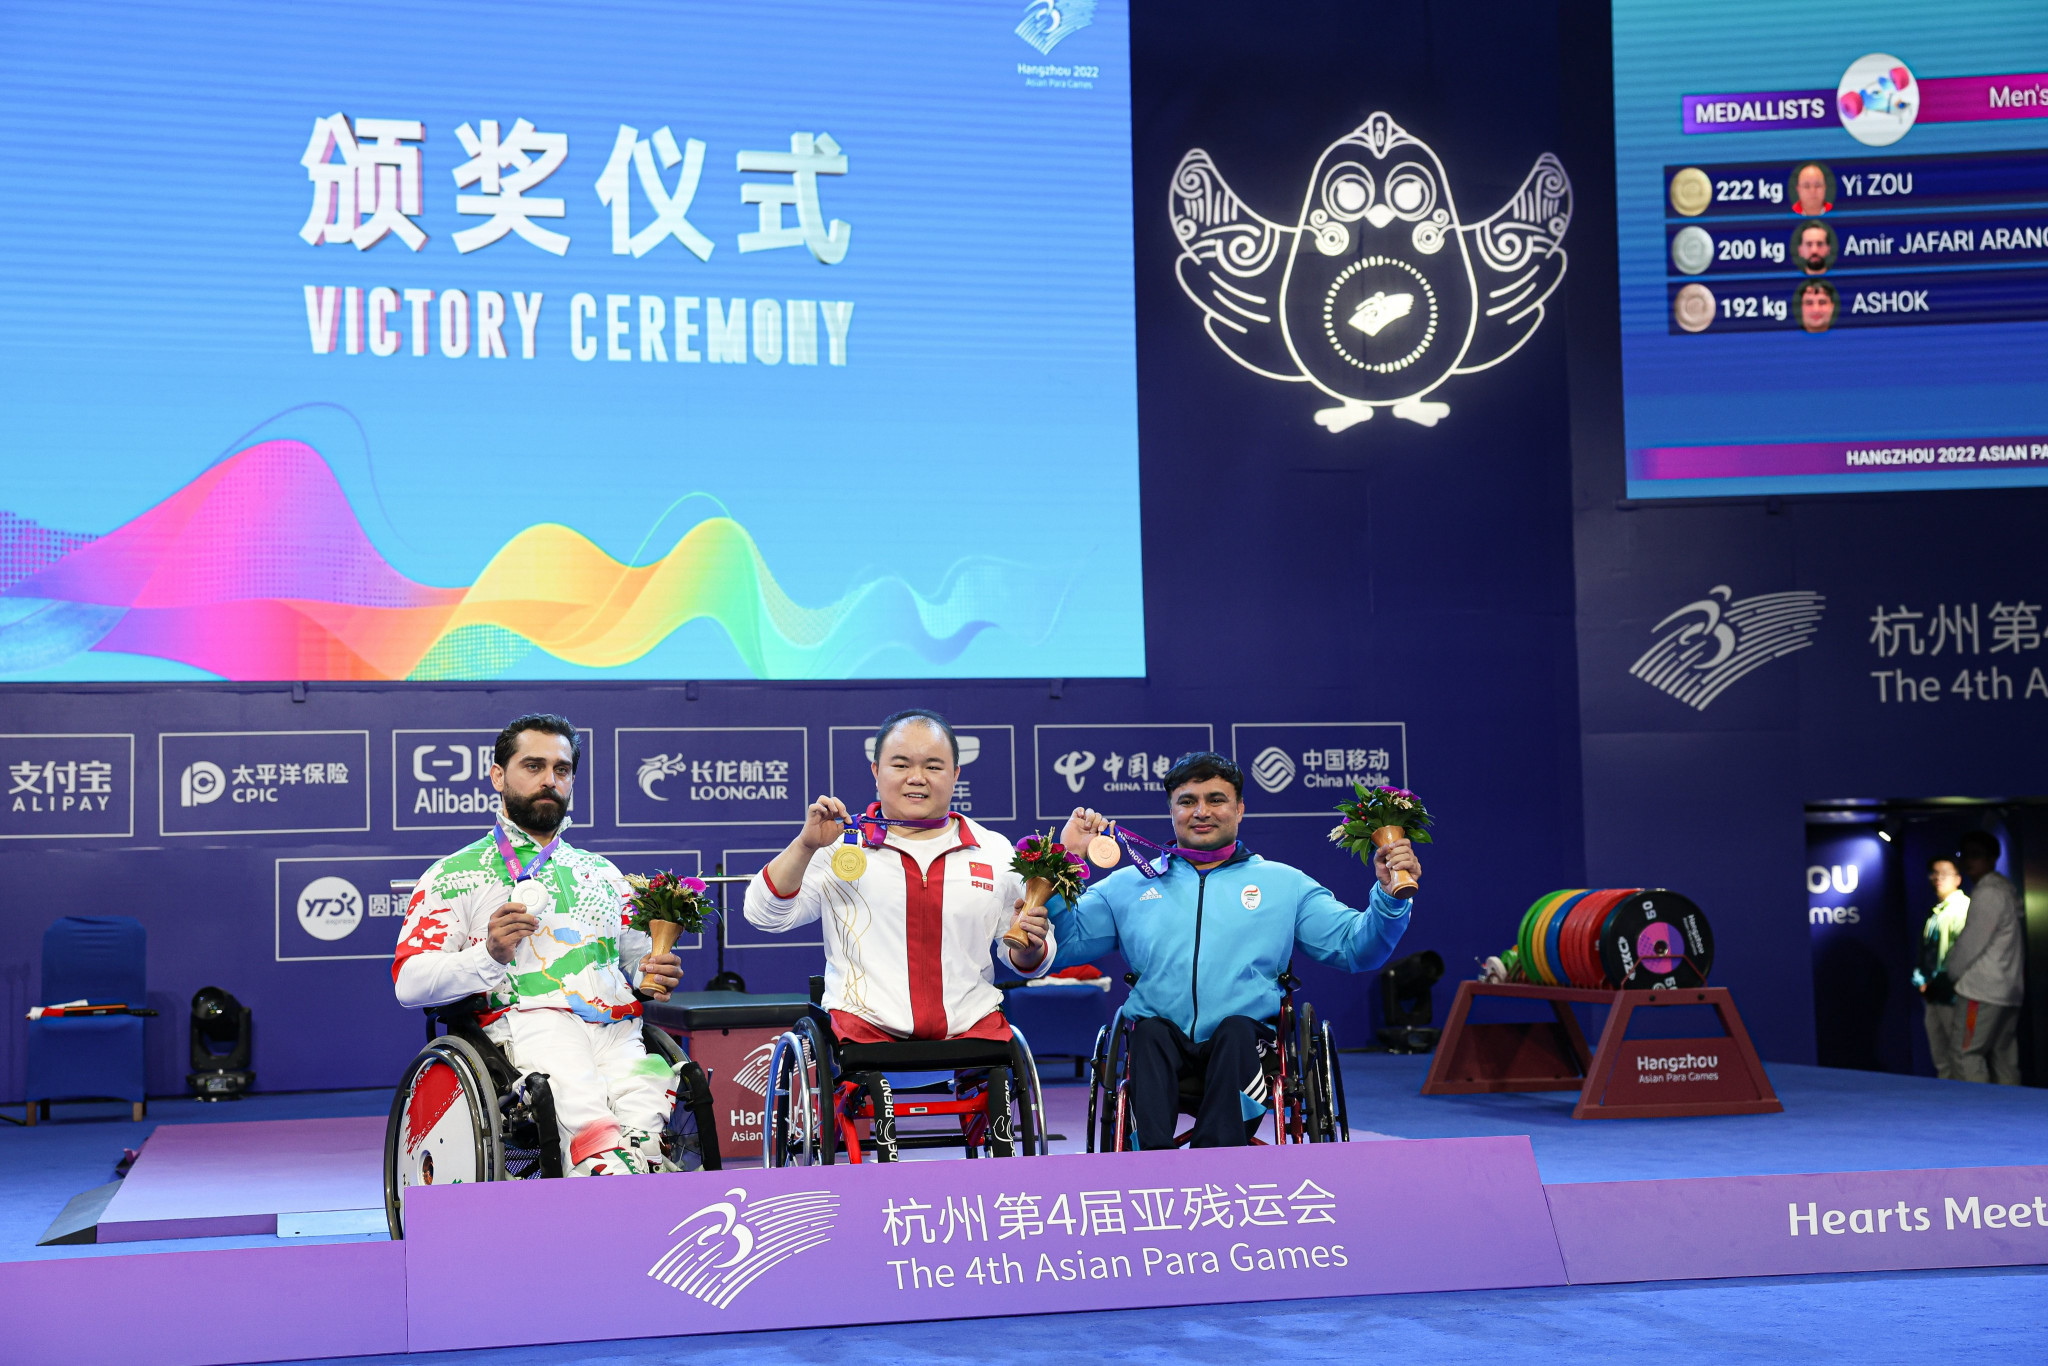 China powerlift their way to glory at Hangzhou 2022 Asian Para Games